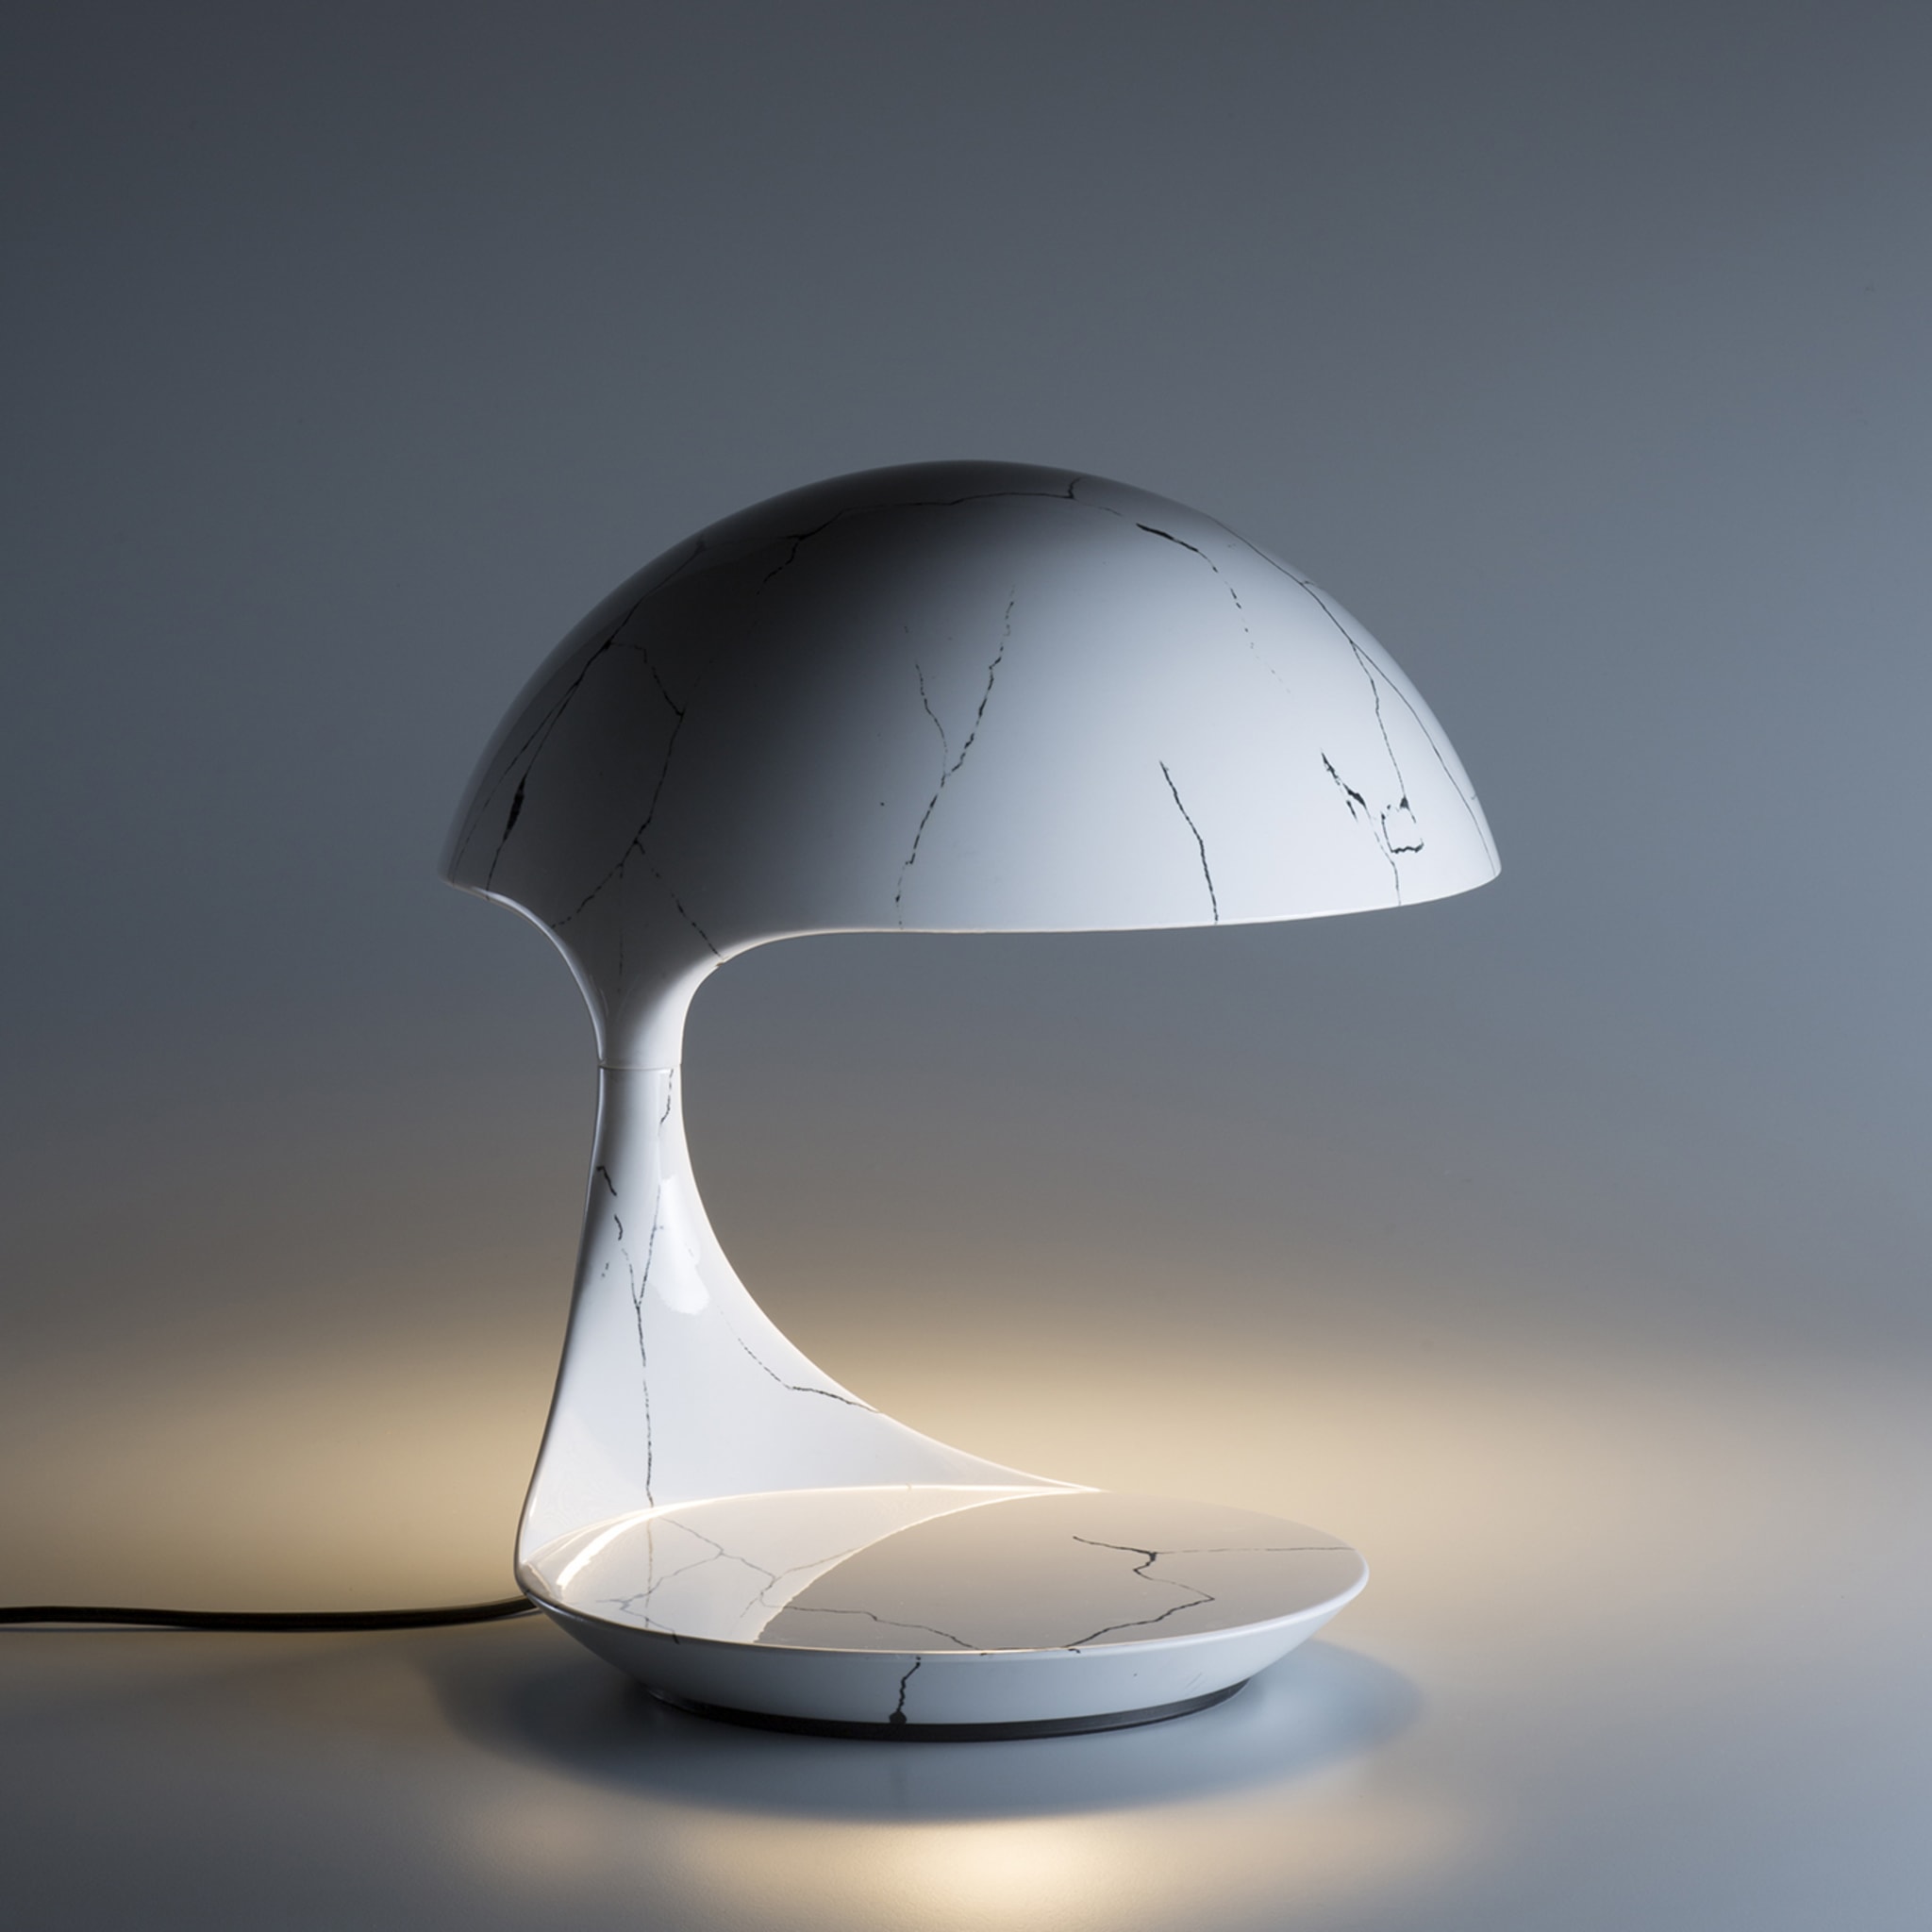 Cobra Texture Kintsugi Table Lamp by Paolo Orlandini - Alternative view 2